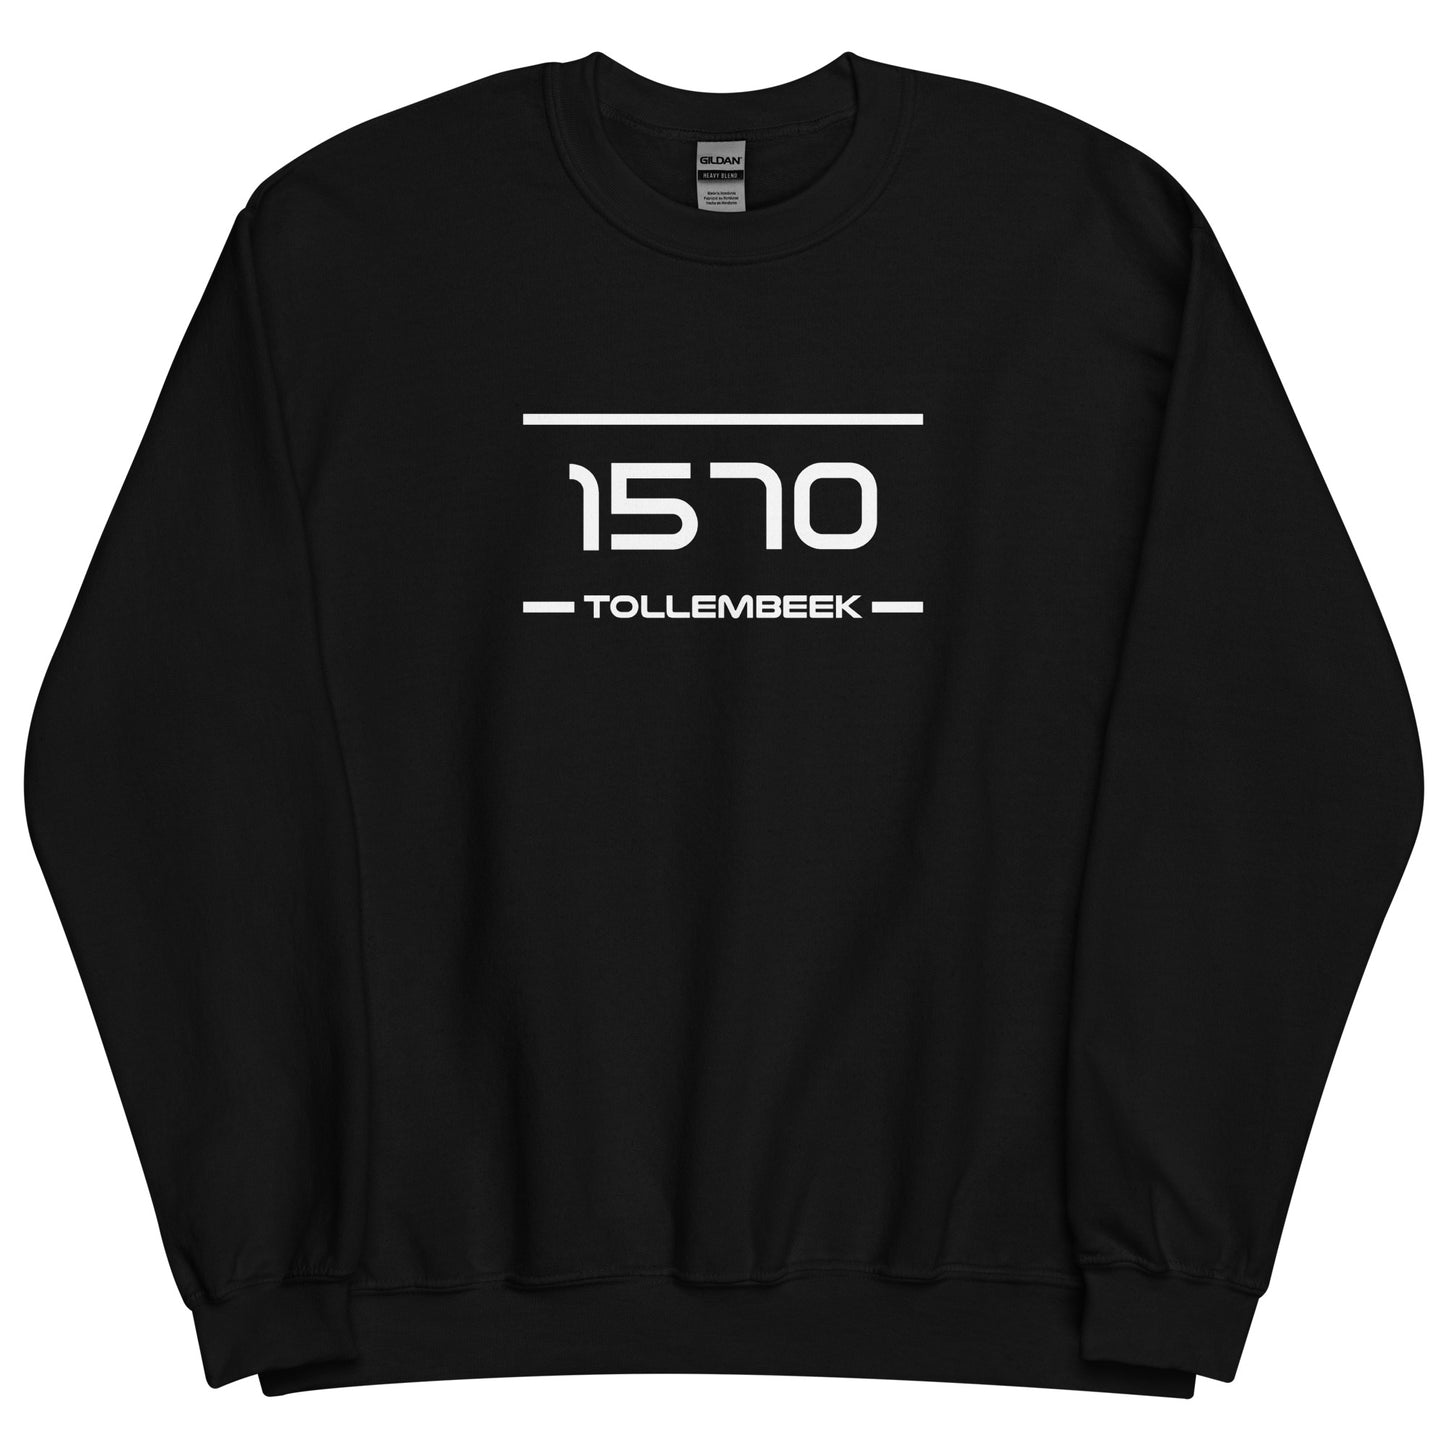 Sweater - 1570 - Tollembeek (M/V)